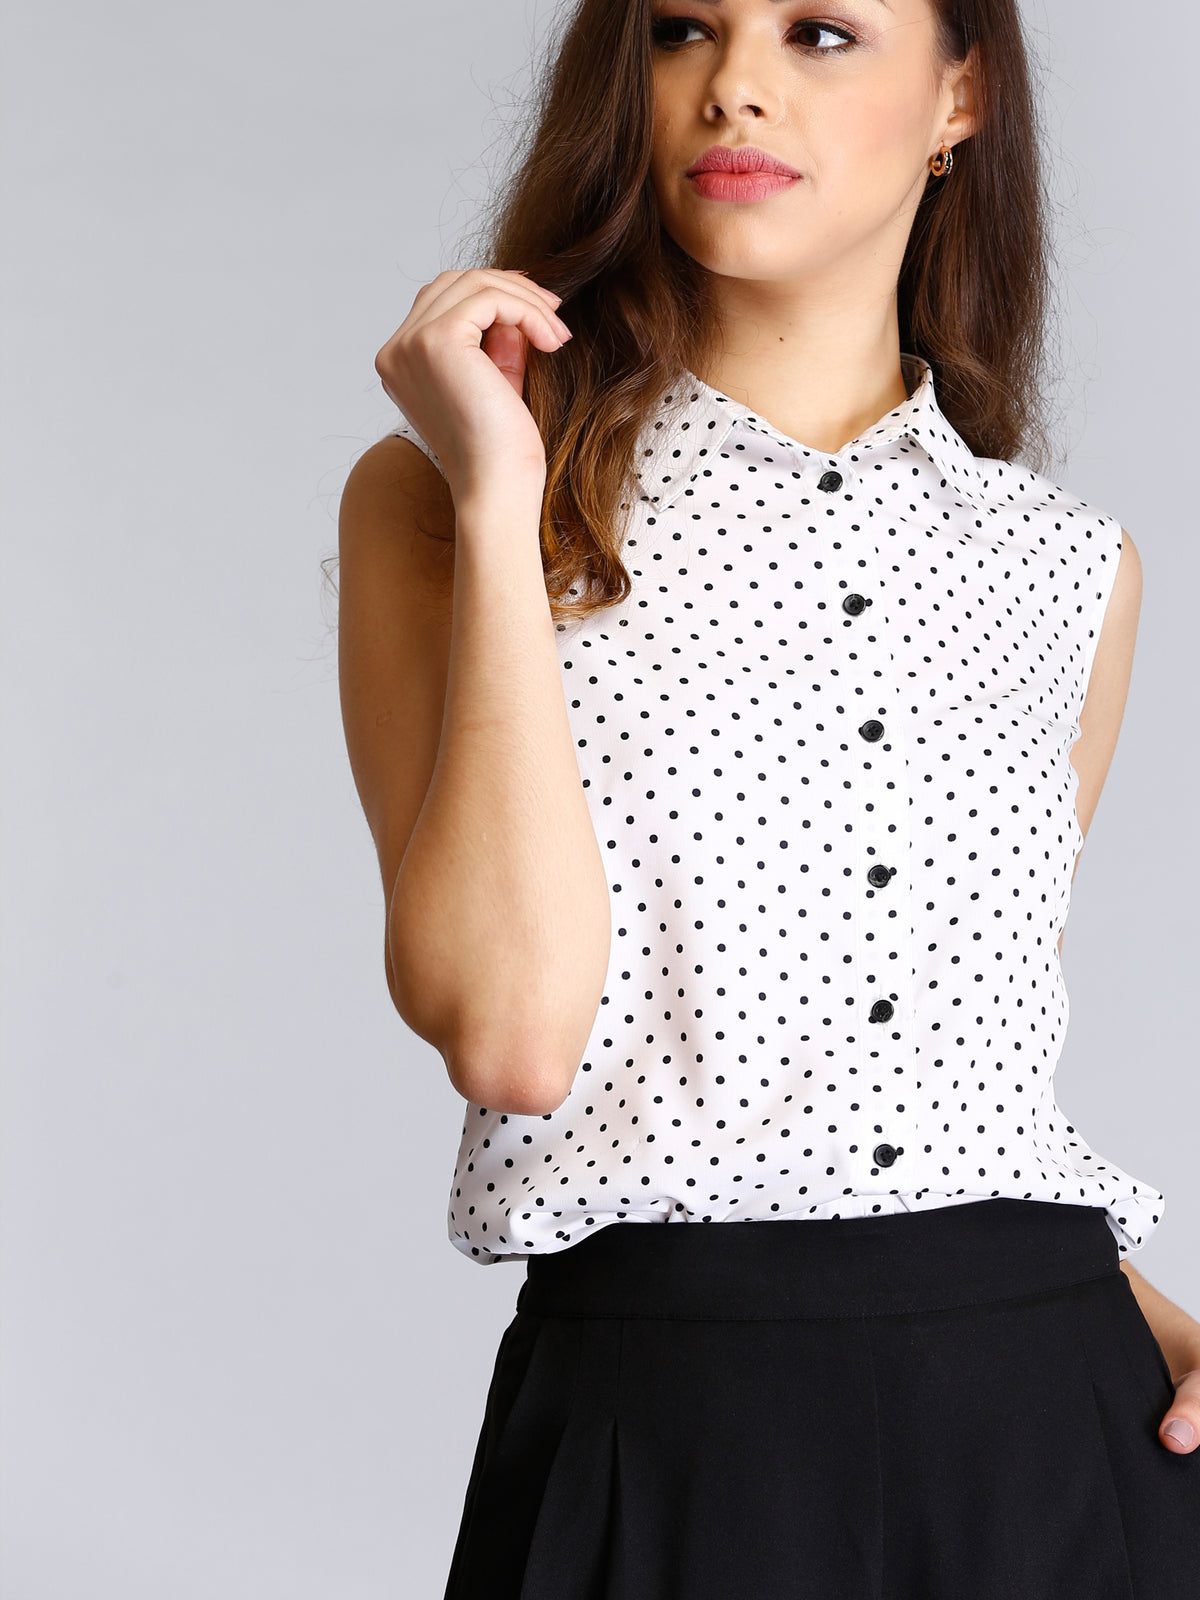 Collared Polka Dot Shirt - White and Black